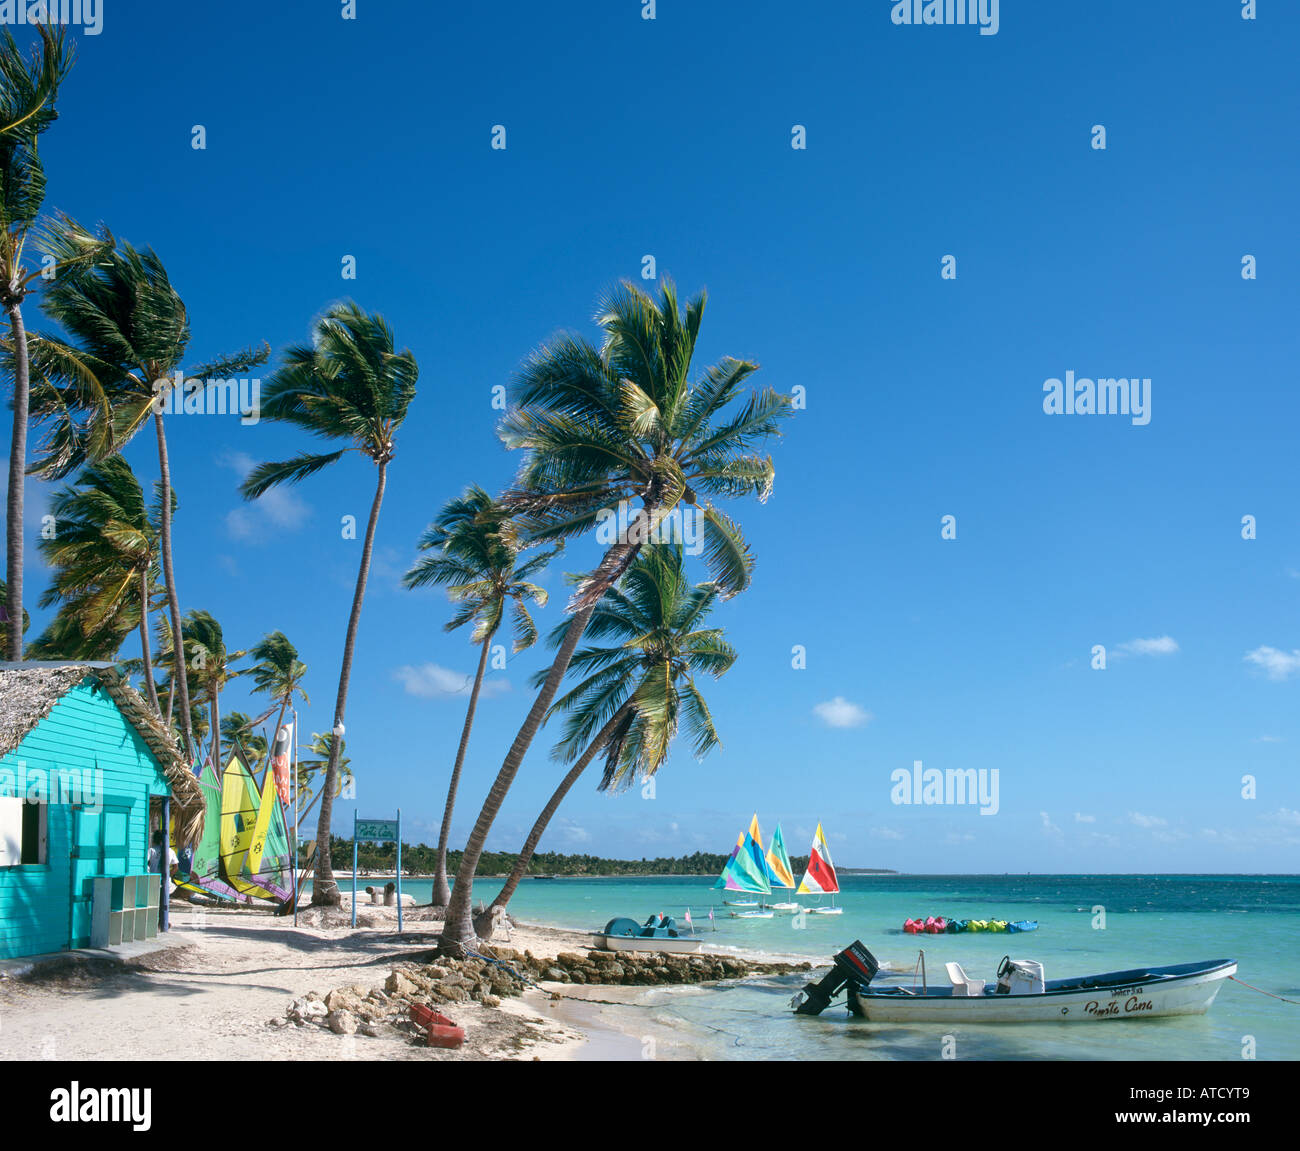 La playa Punta Cana, República Dominicana, El Caribe Foto de stock